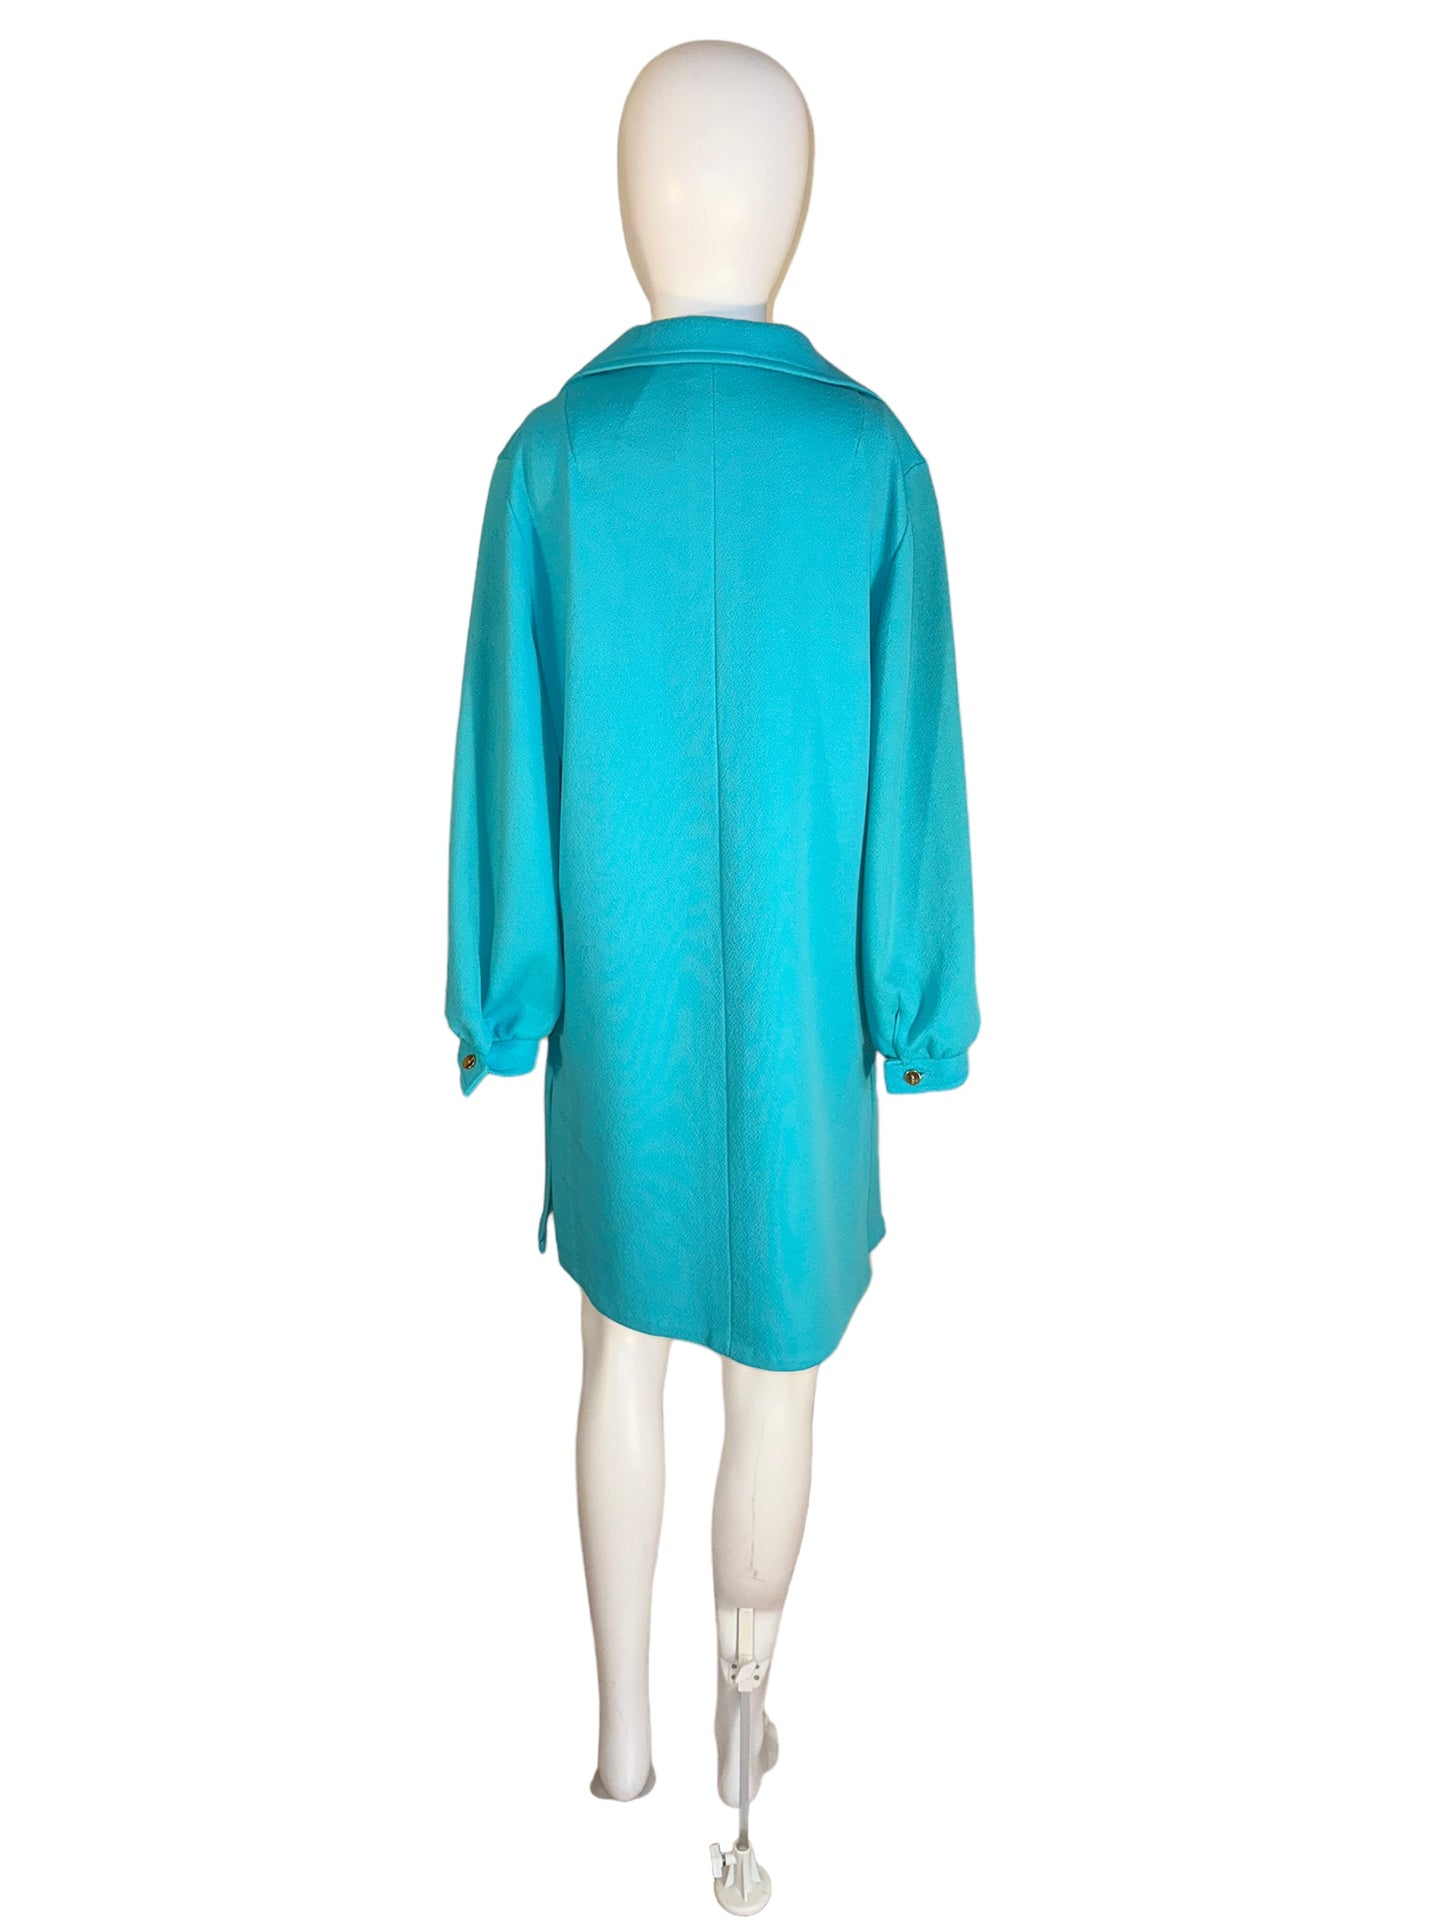 Vintage Wide Lapel Dress Turquoise Hand Painted Mini/Midi Dress 1970s